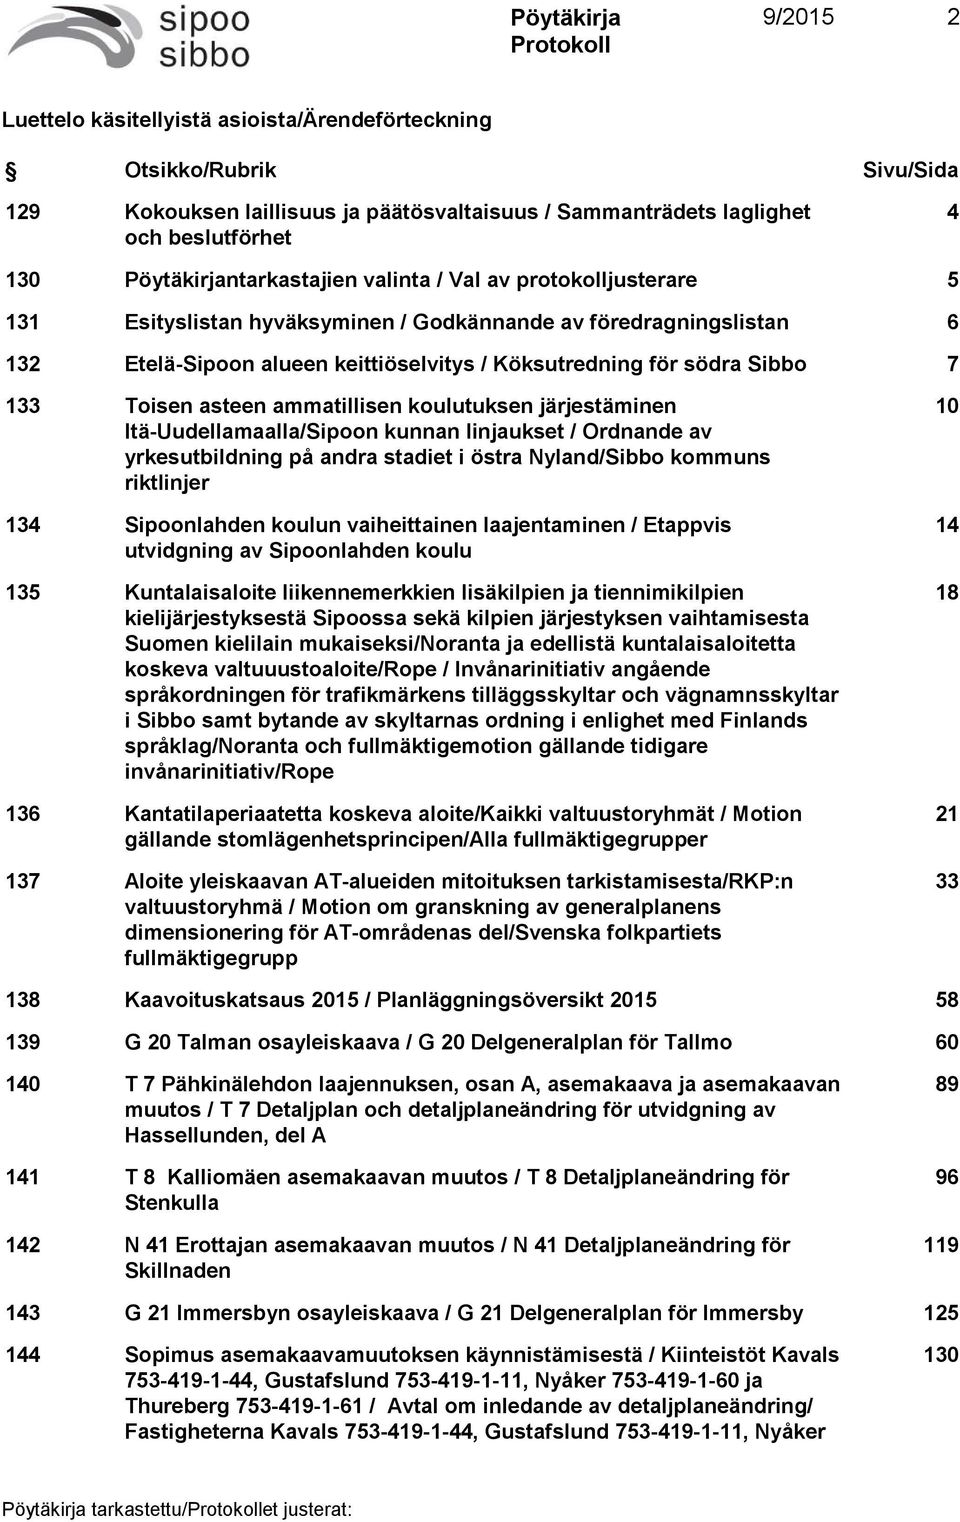 Sibbo 7 133 Toisen asteen ammatillisen koulutuksen järjestäminen Itä-Uudellamaalla/Sipoon kunnan linjaukset / Ordnande av yrkesutbildning på andra stadiet i östra Nyland/Sibbo kommuns riktlinjer 134